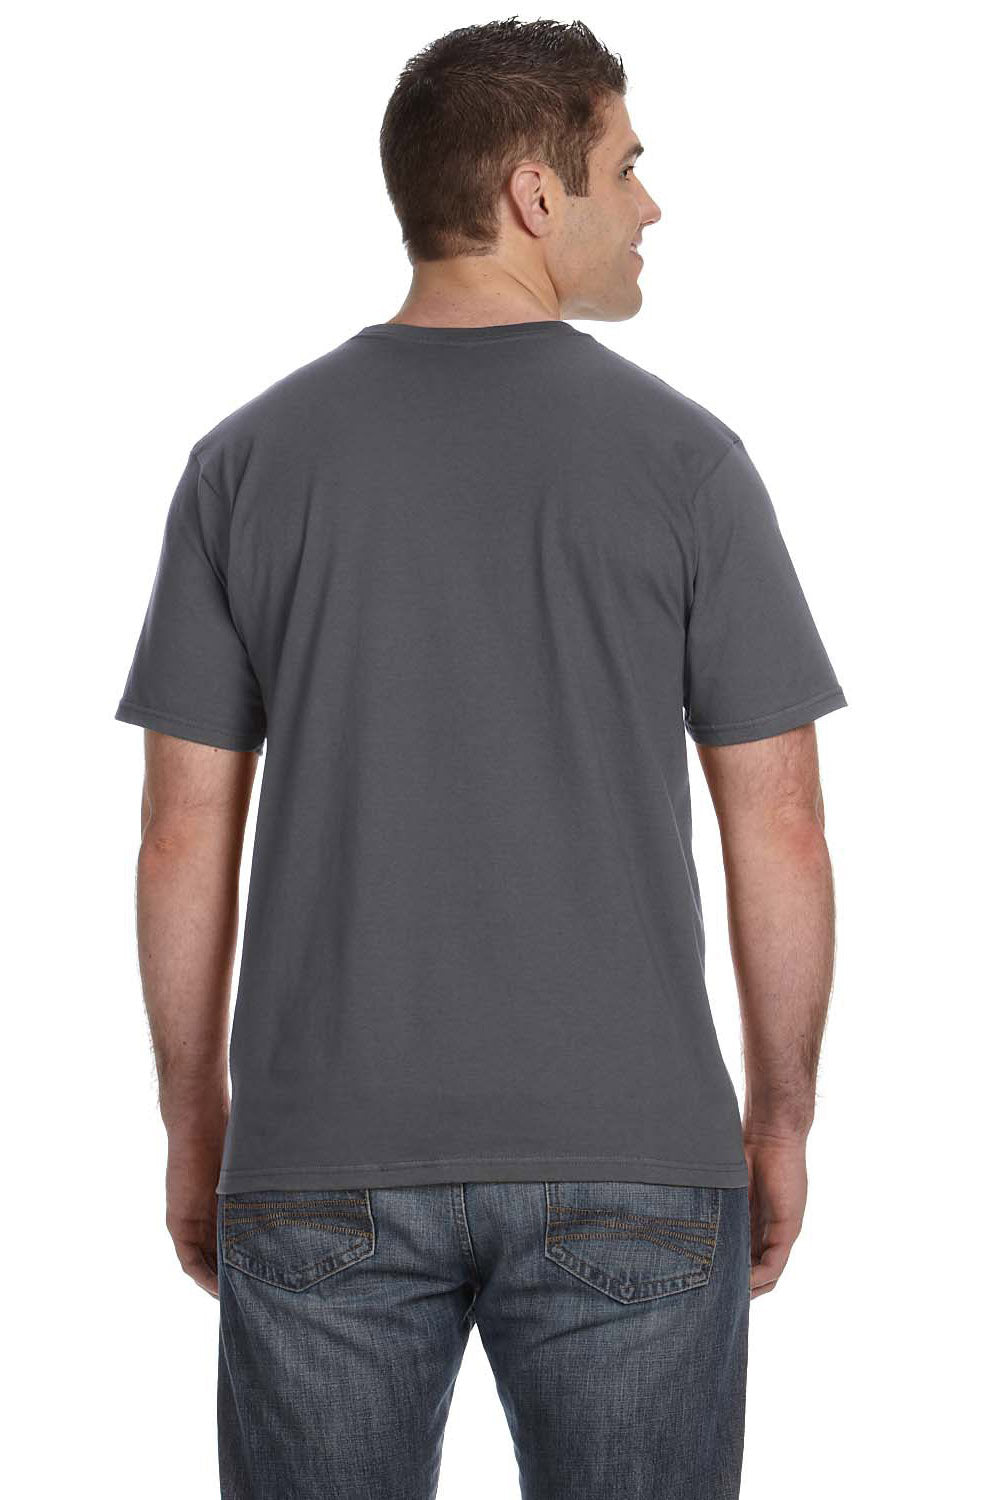 Anvil 980 Mens Short Sleeve Crewneck T-Shirt Charcoal Grey Back